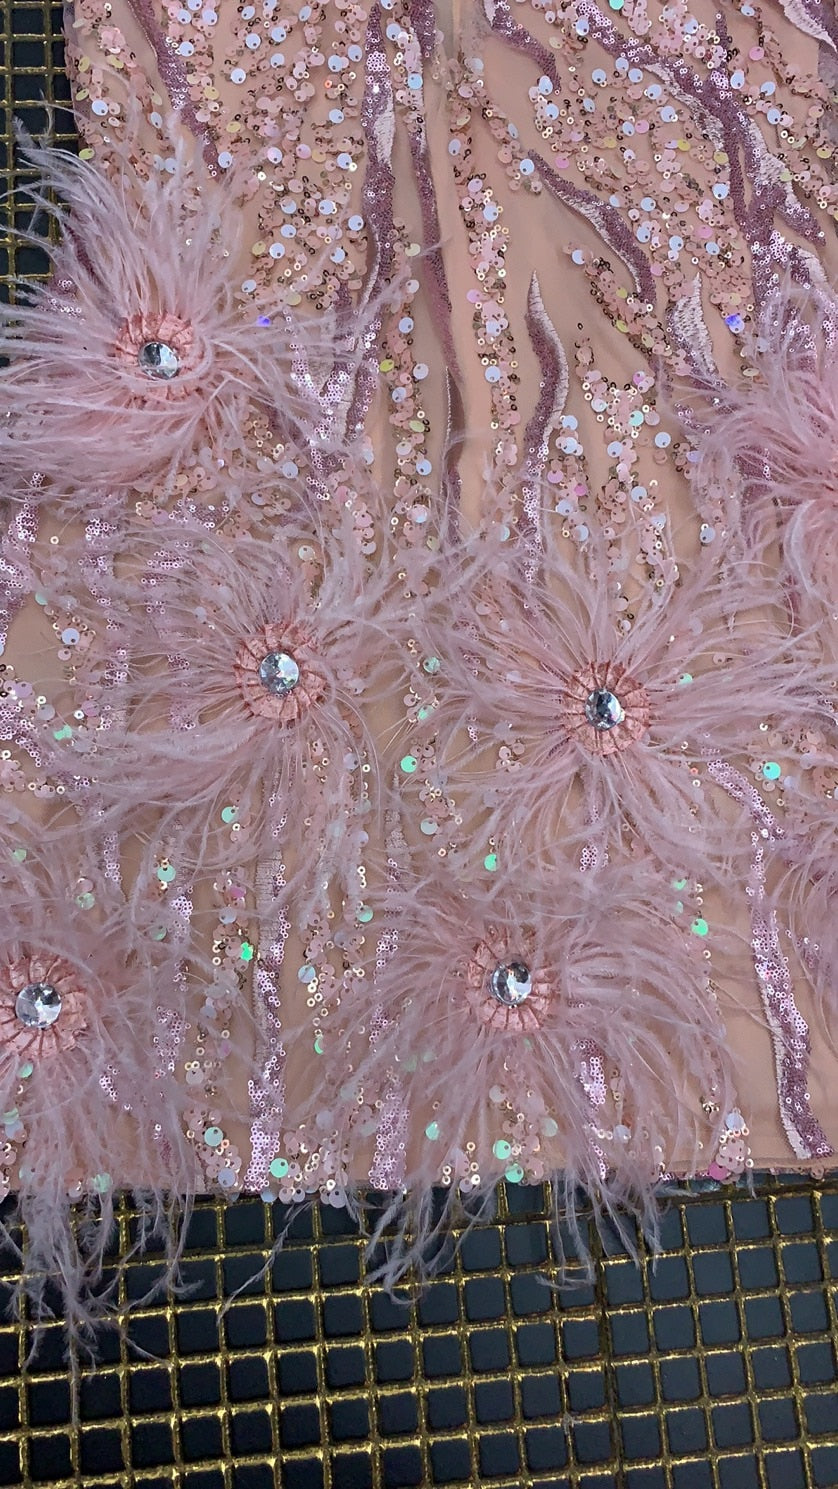 Pink Feather V-Neck Fashion Bodycon Mini Dress